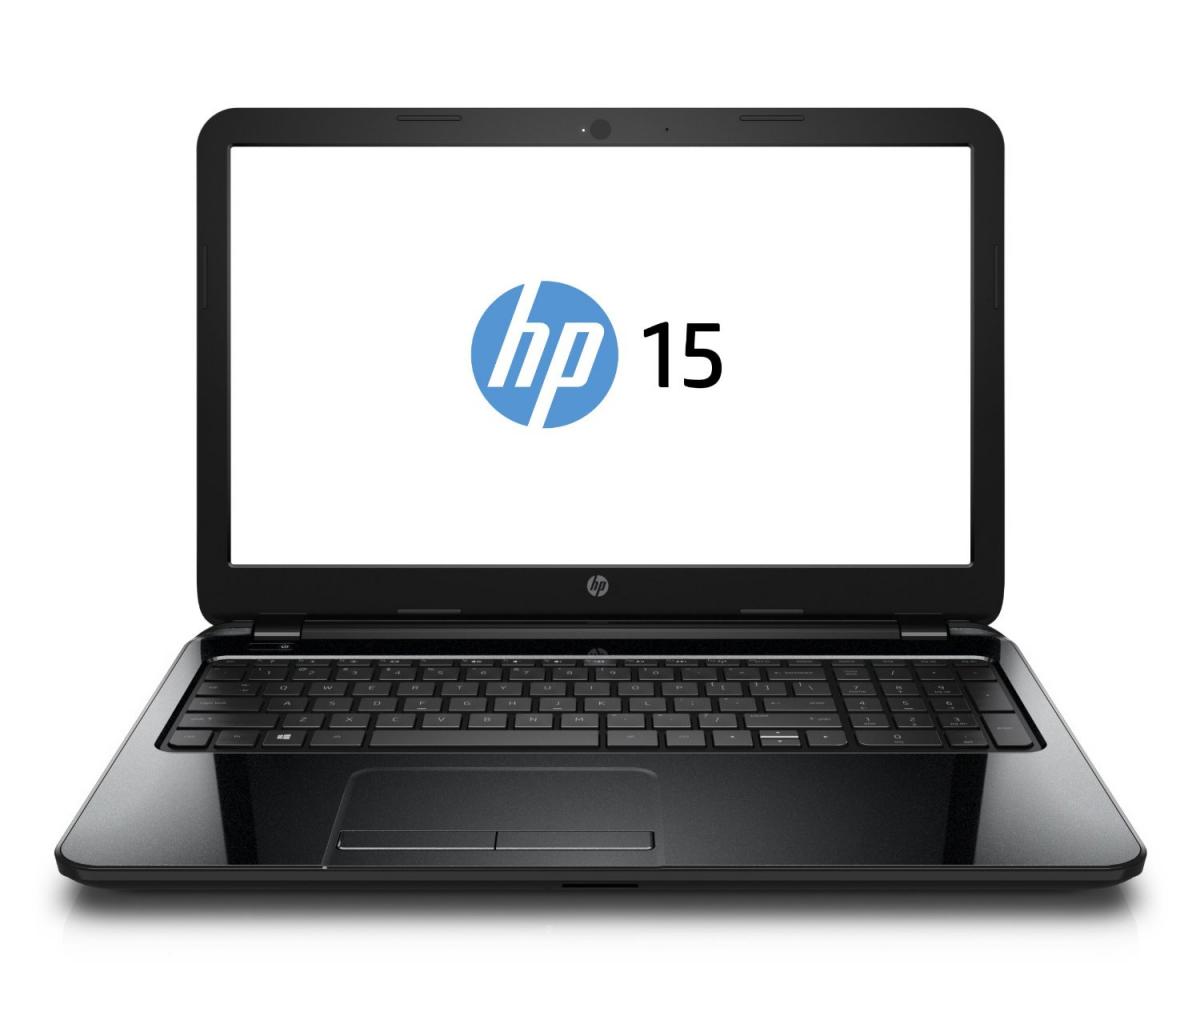 HP 15-g070nr 15.6-Inch Laptop